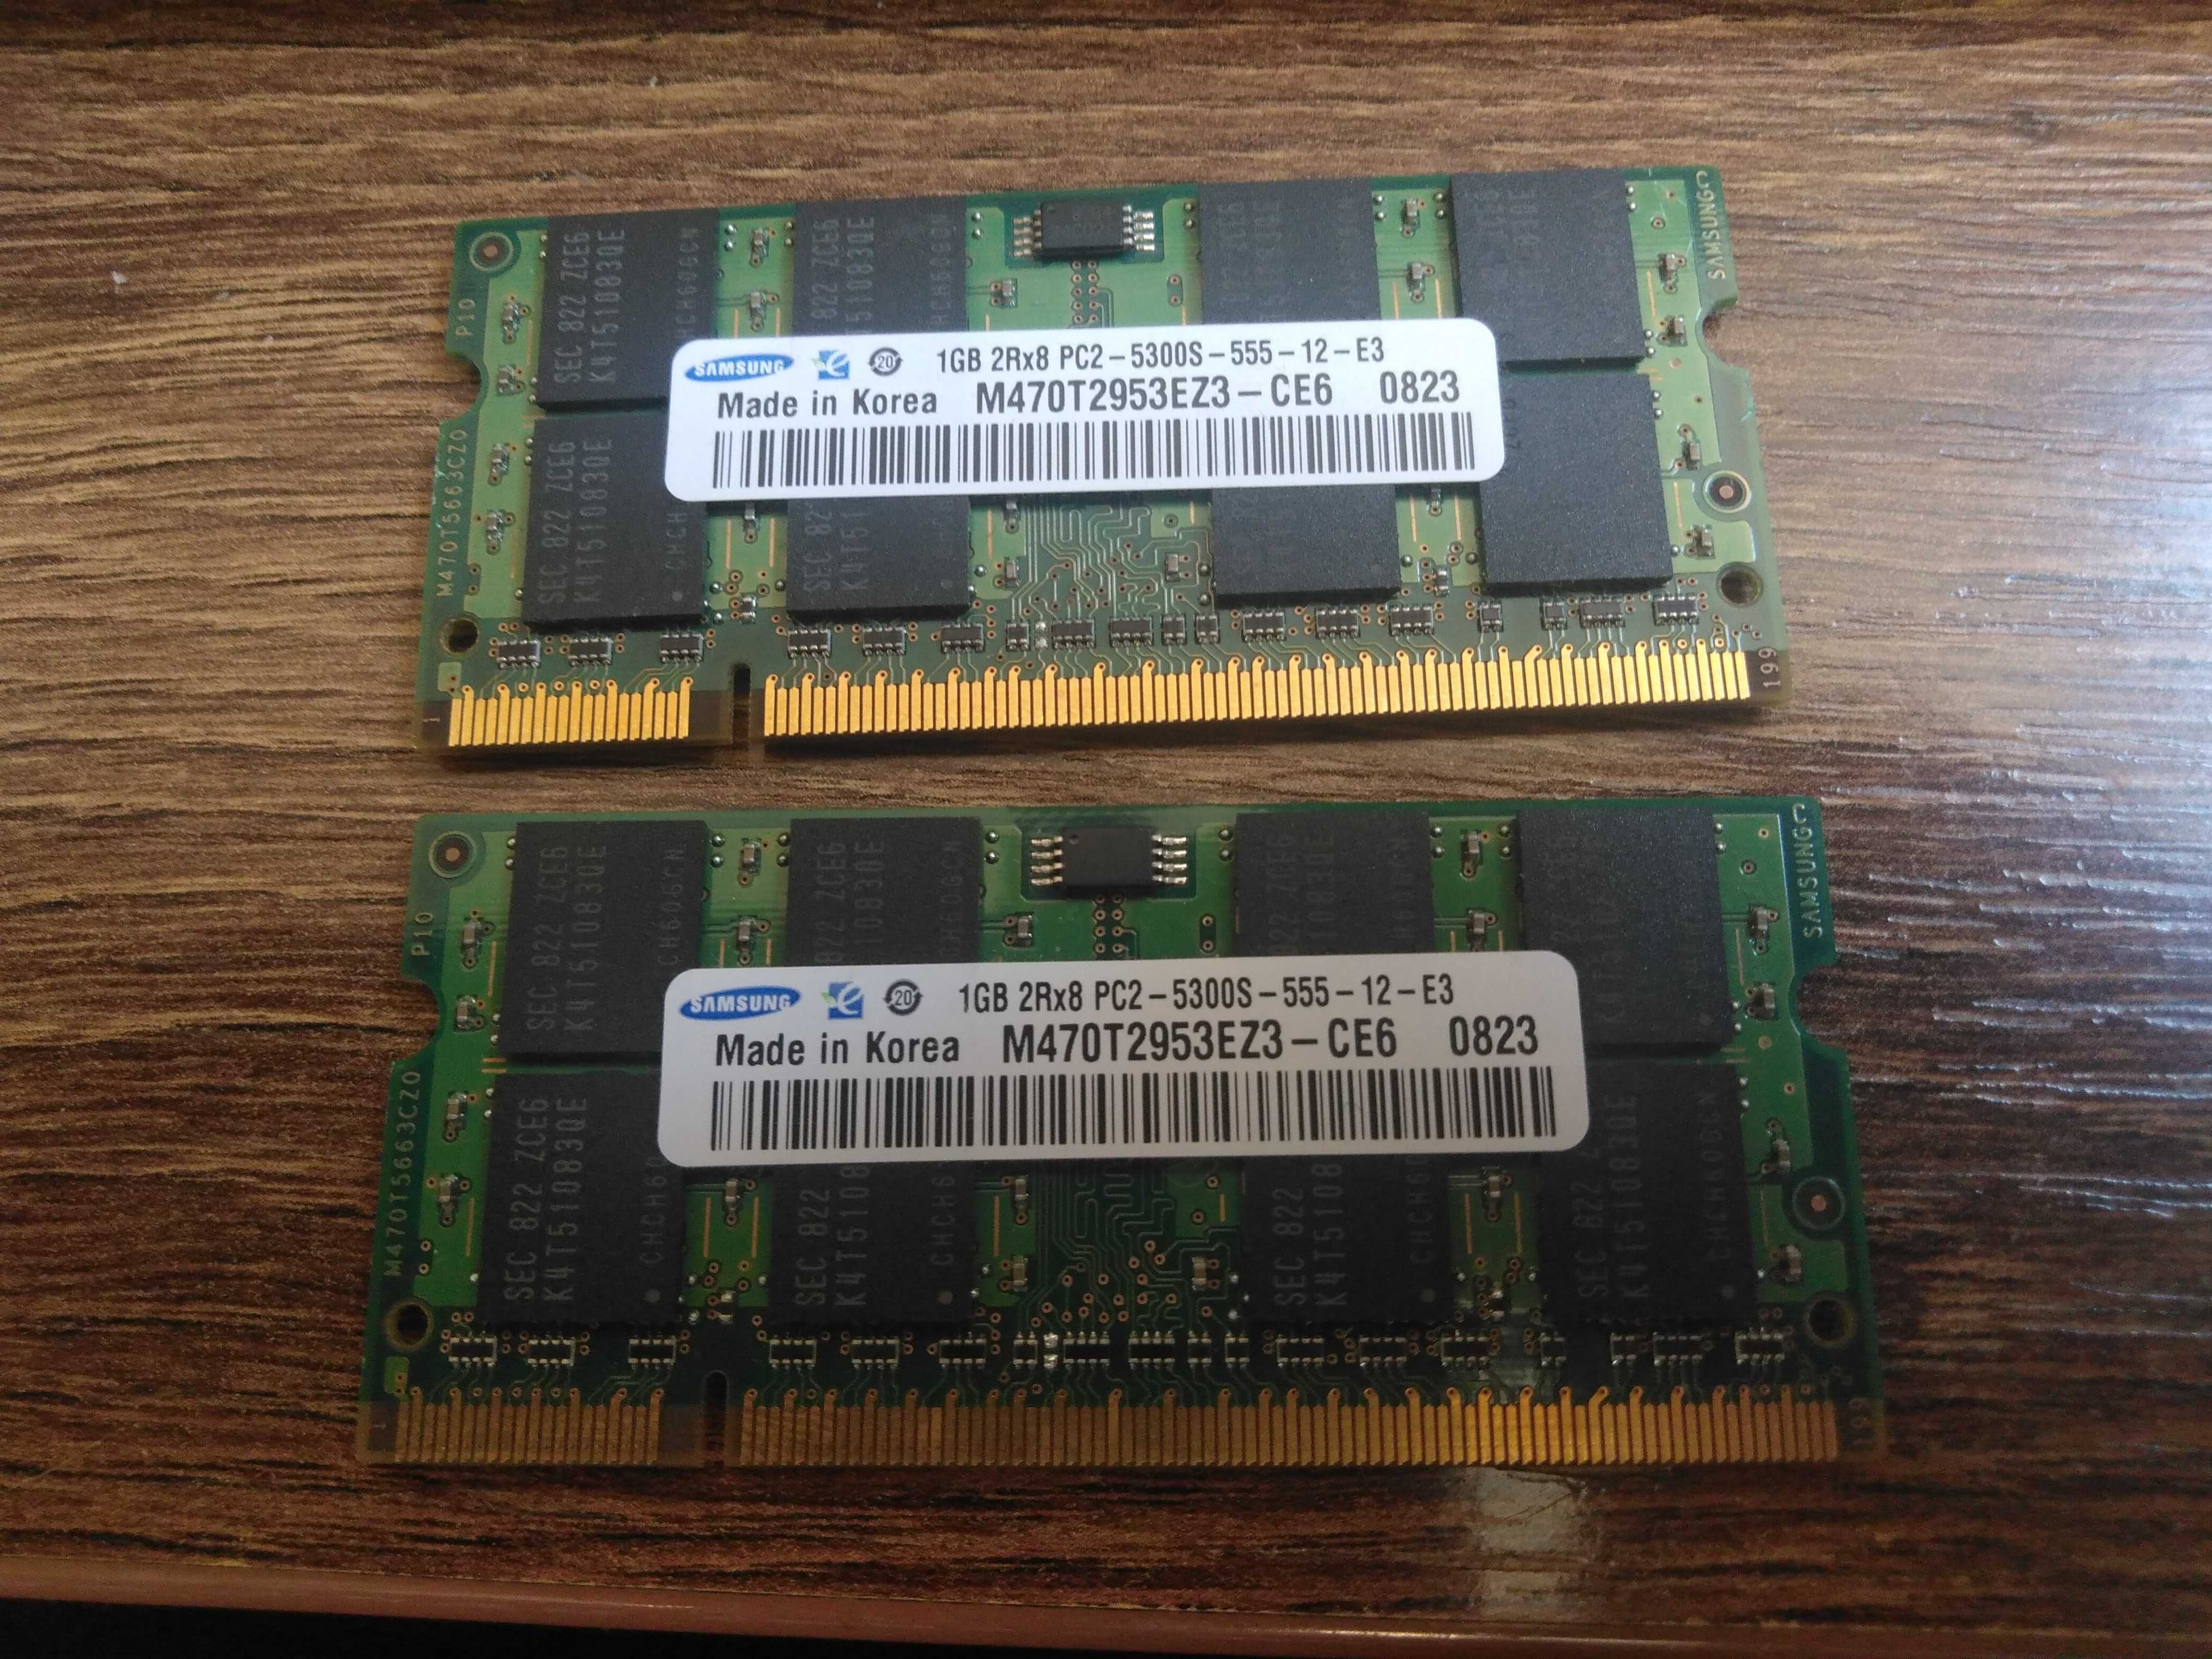 Kit SODIMM DDR2 Samsung 2GB (2x1GB), 667Mhz, PC2-5300S, CL5, 1.8v